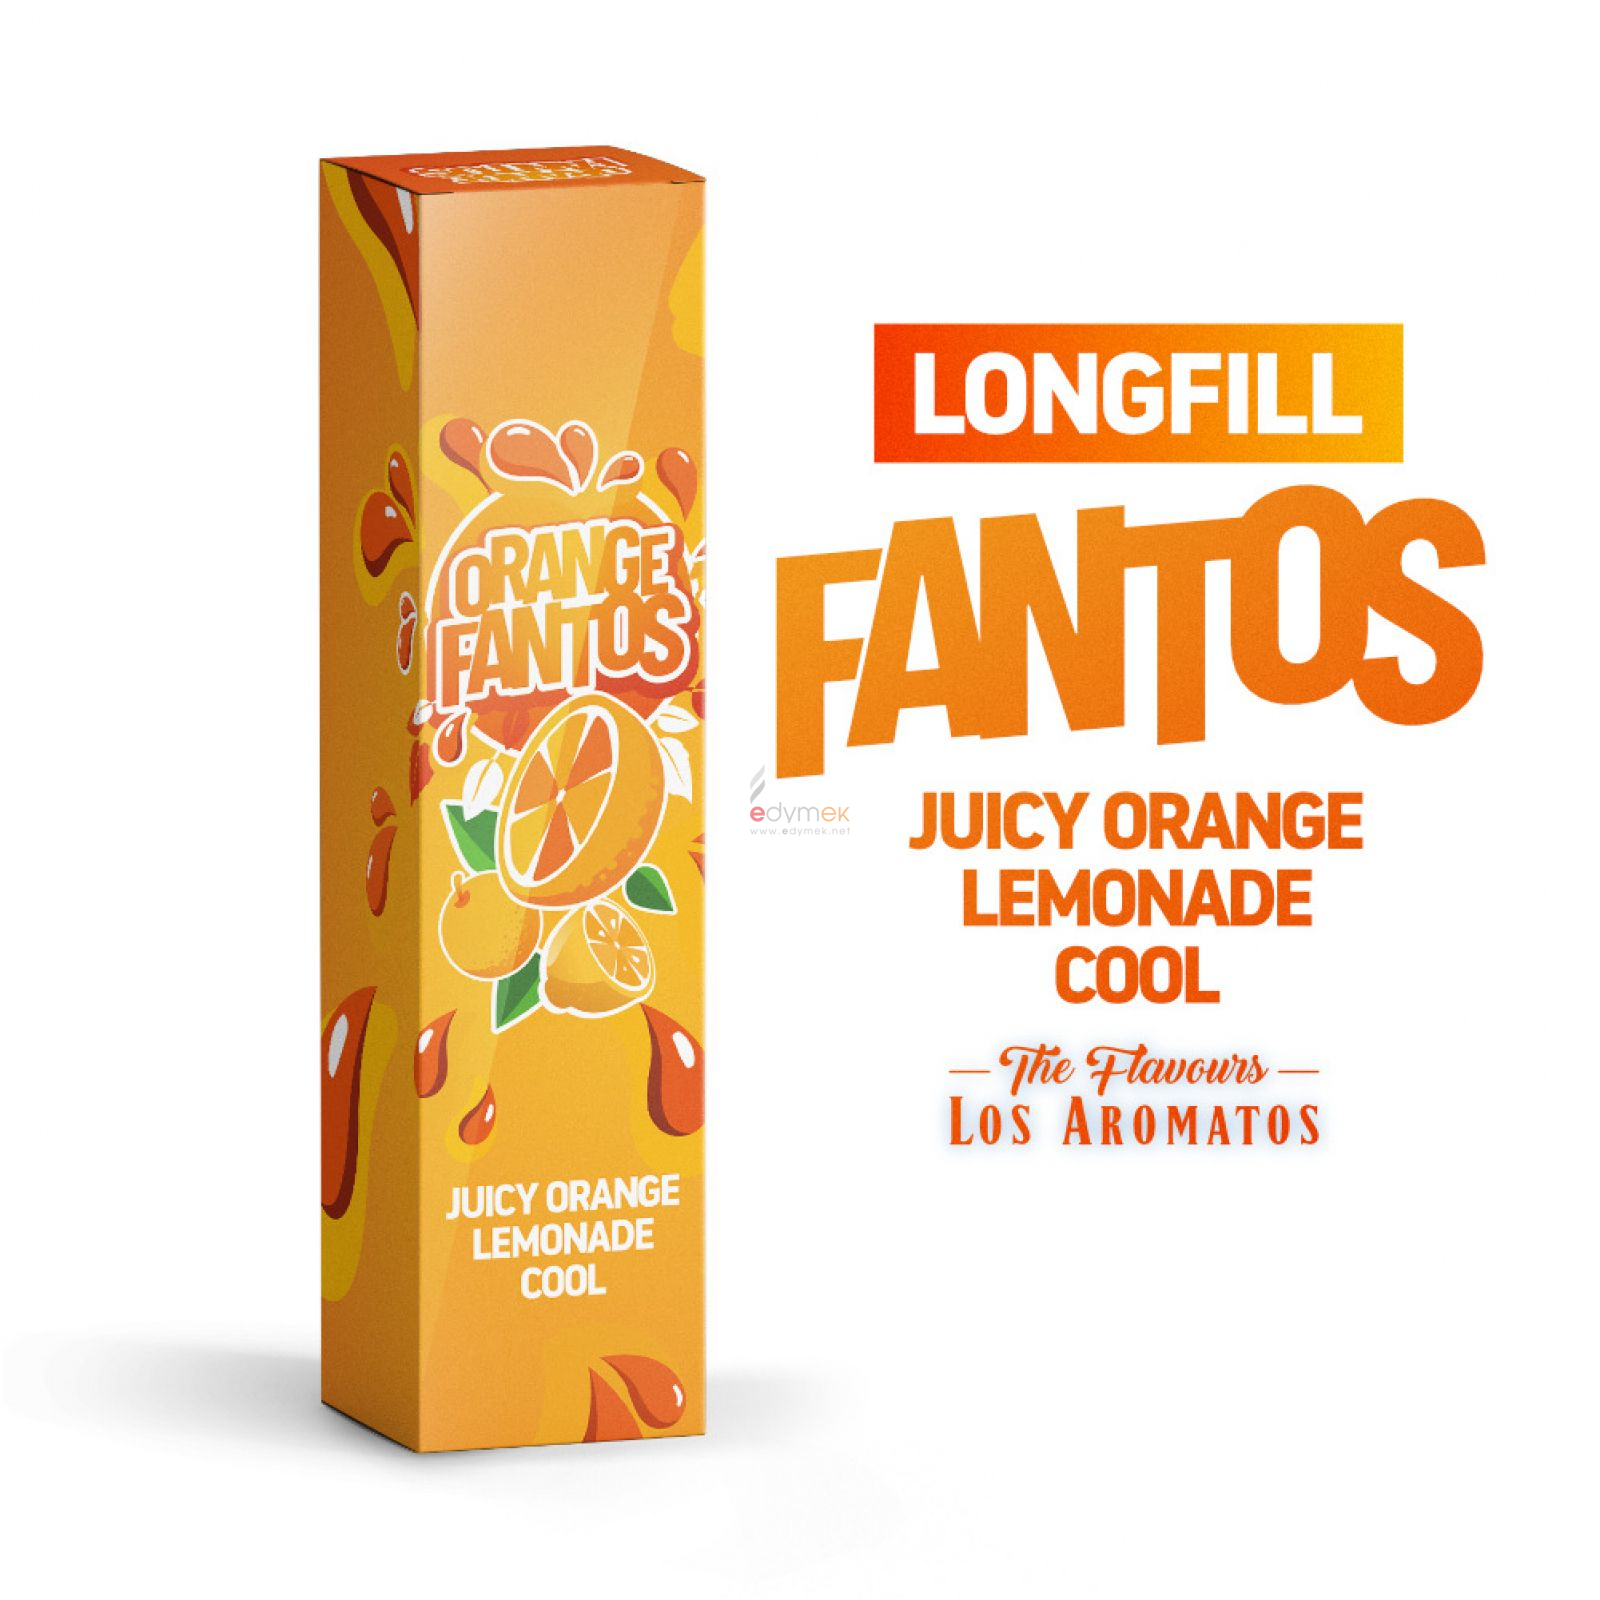 longfill-fantos-koncentrat-9ml-orange-fantos-0d5d128d425c4d67933c04bbb7cee84d-9271ee26.jpg